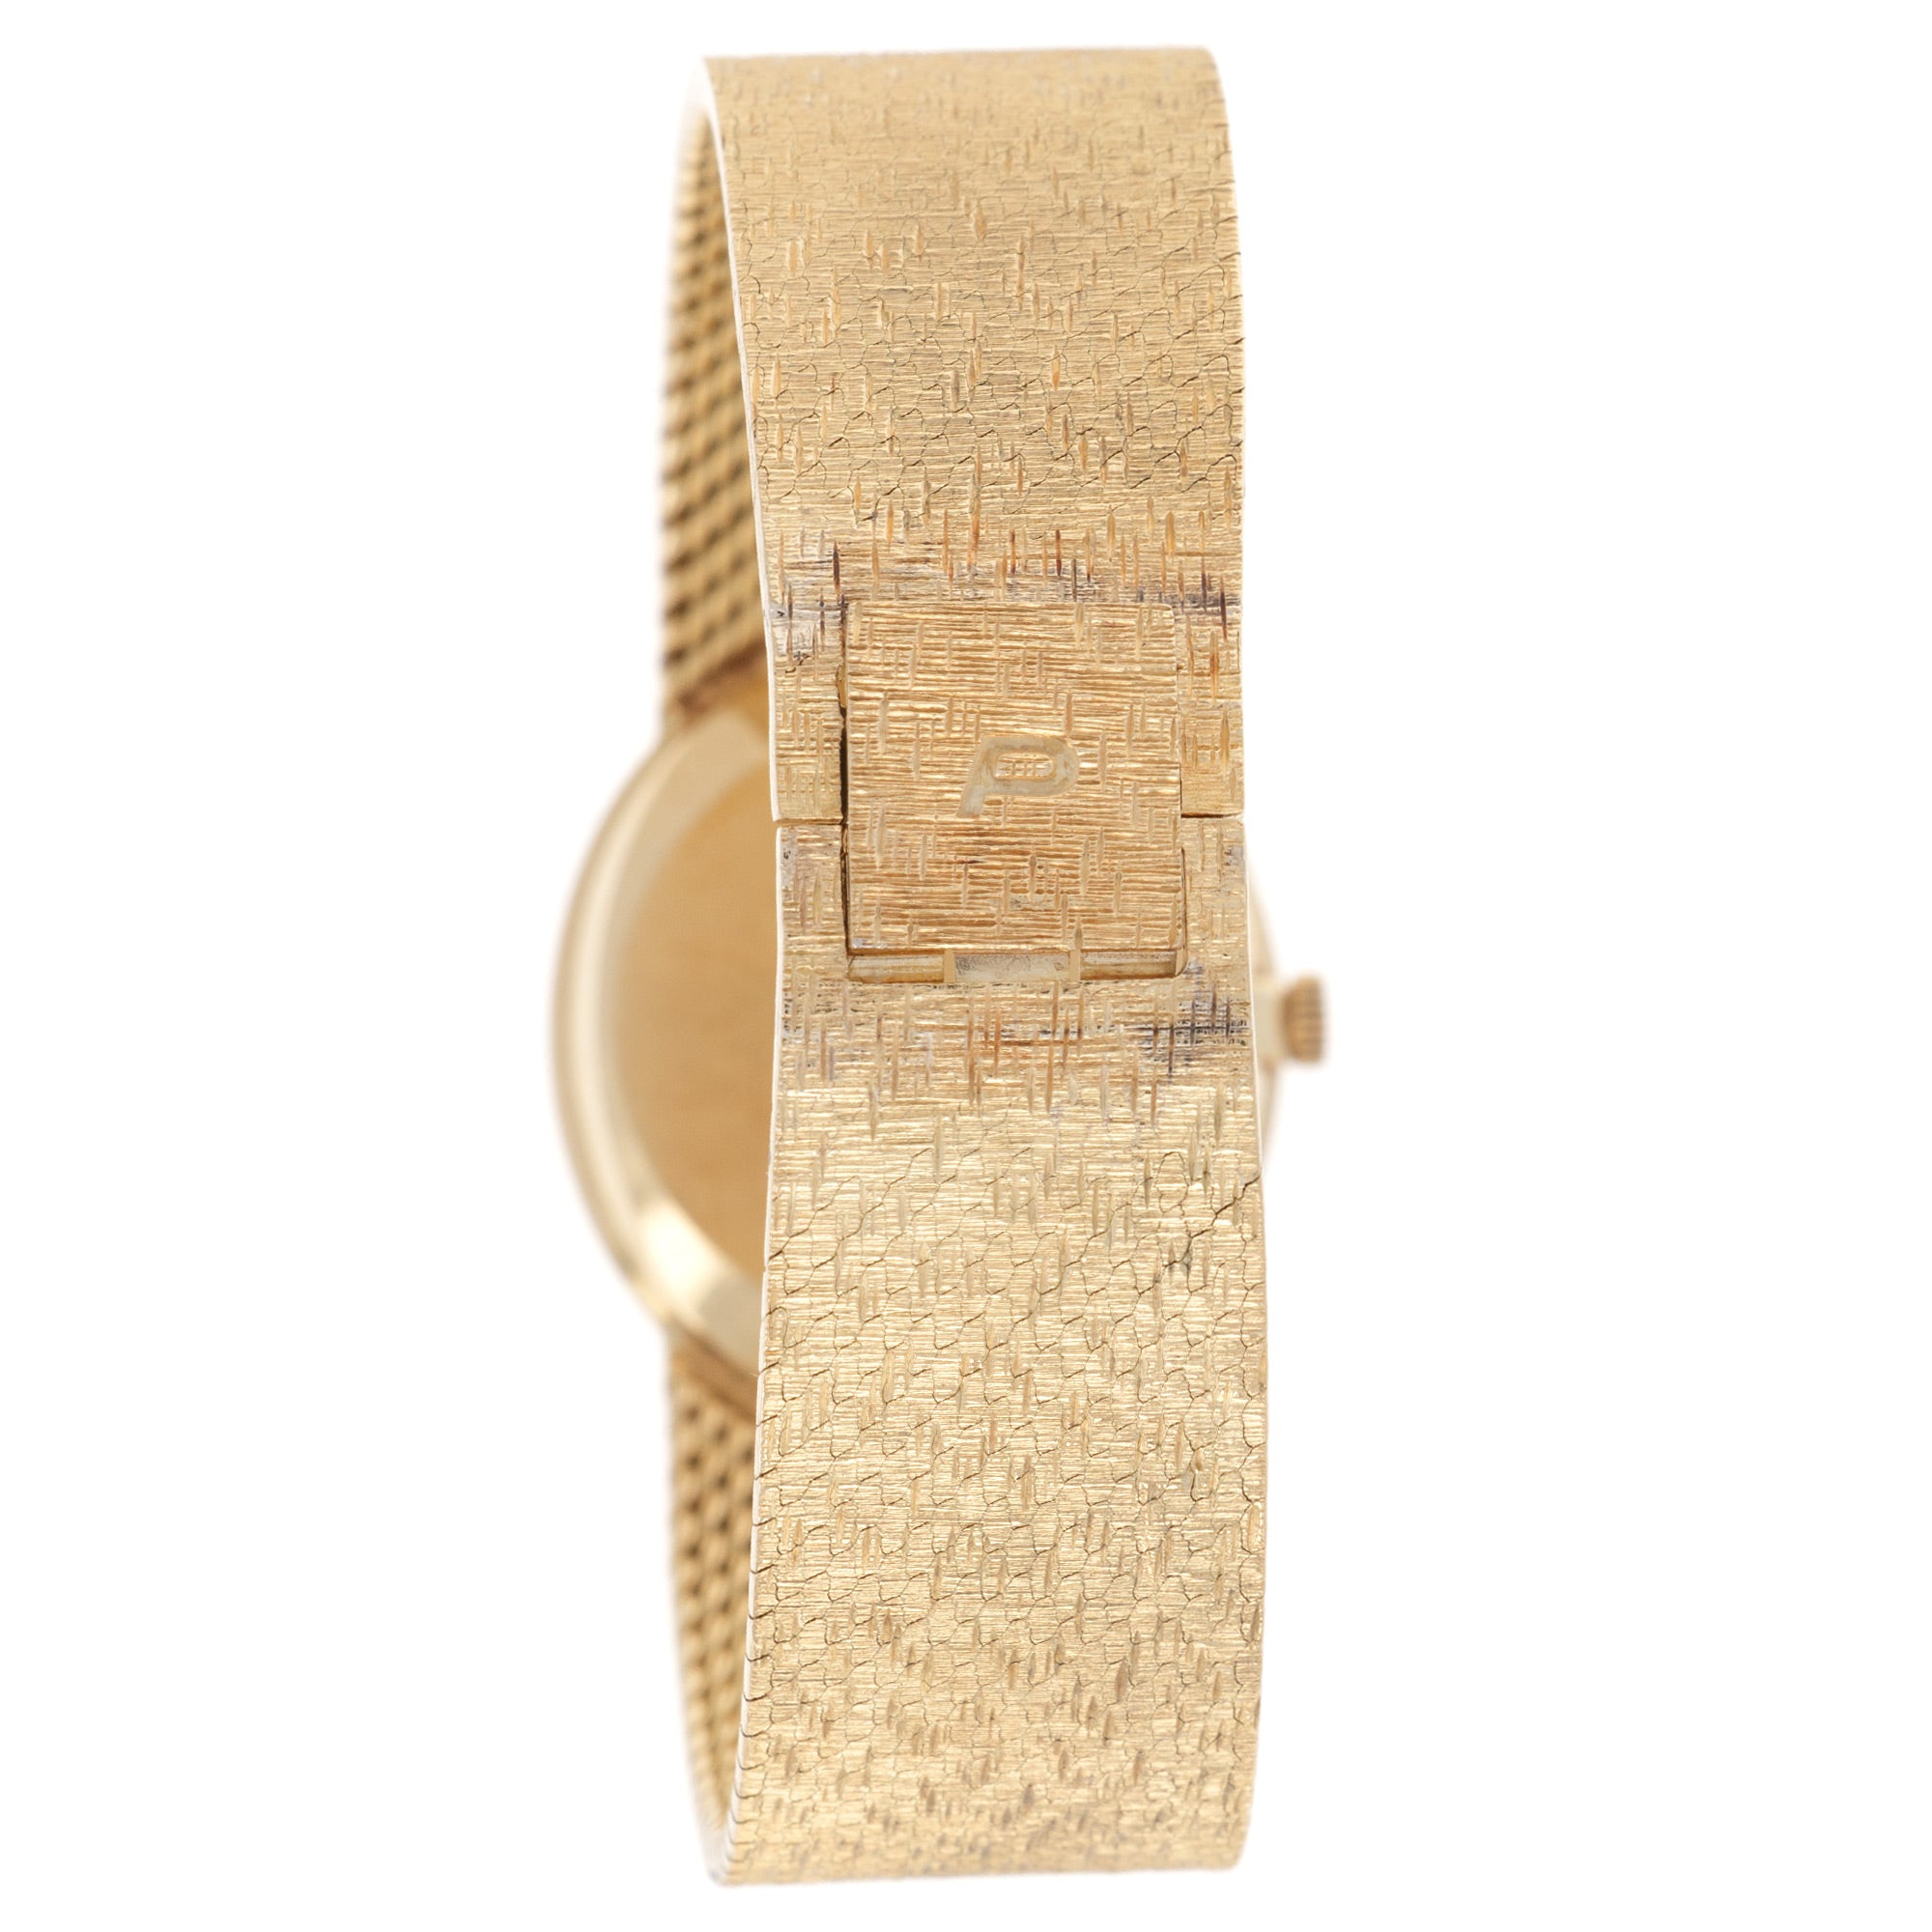 Piaget - Piaget Yellow Gold Tigerseye Watch - The Keystone Watches